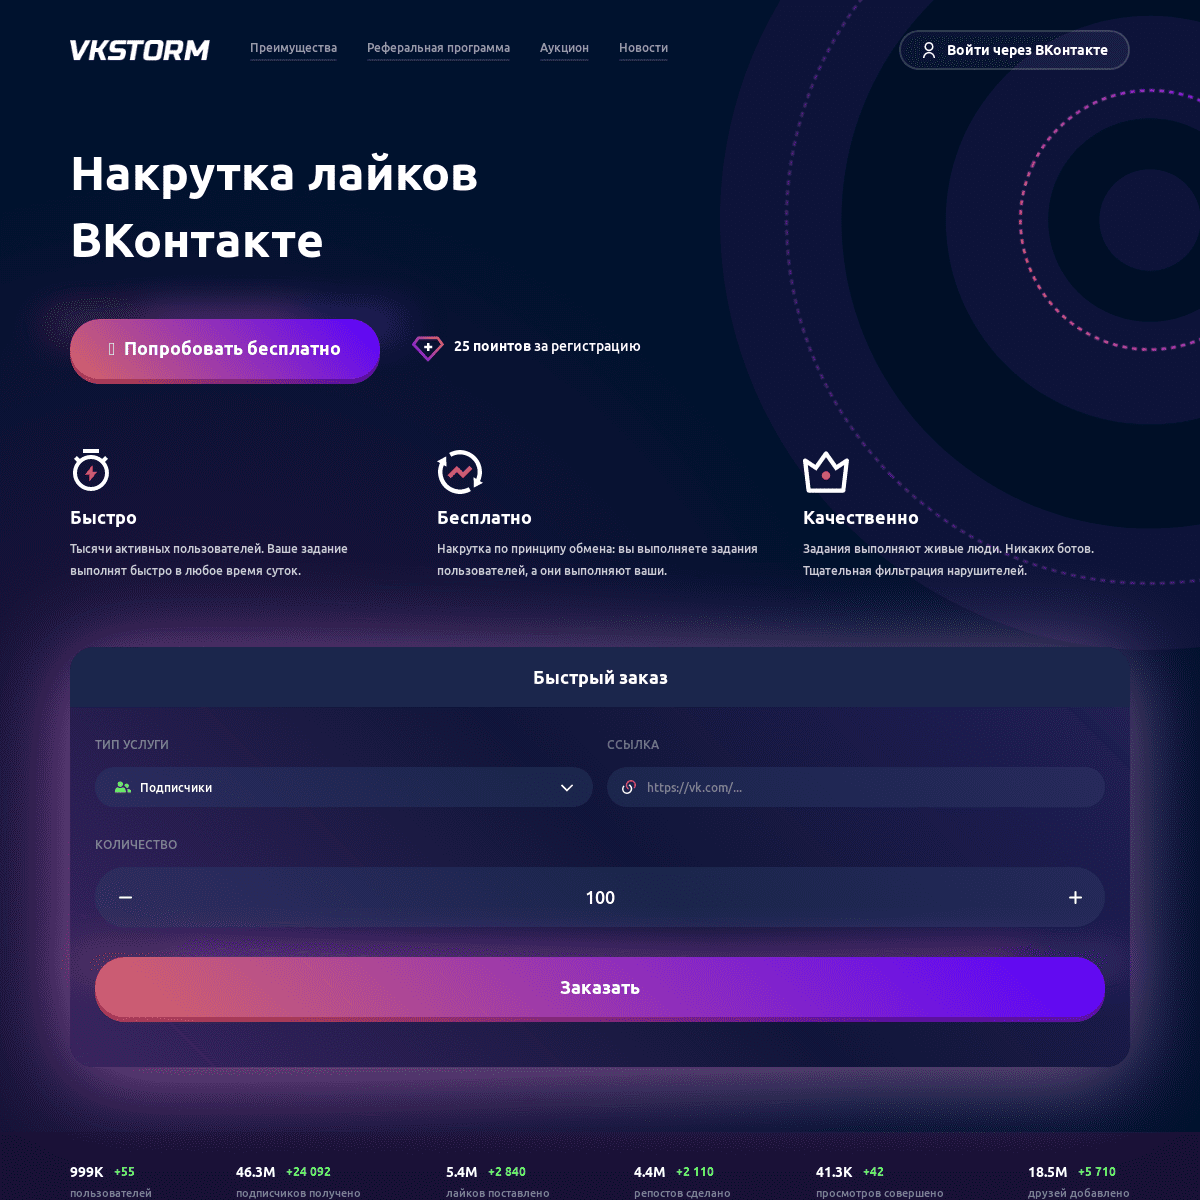 A complete backup of vkstorm.ru